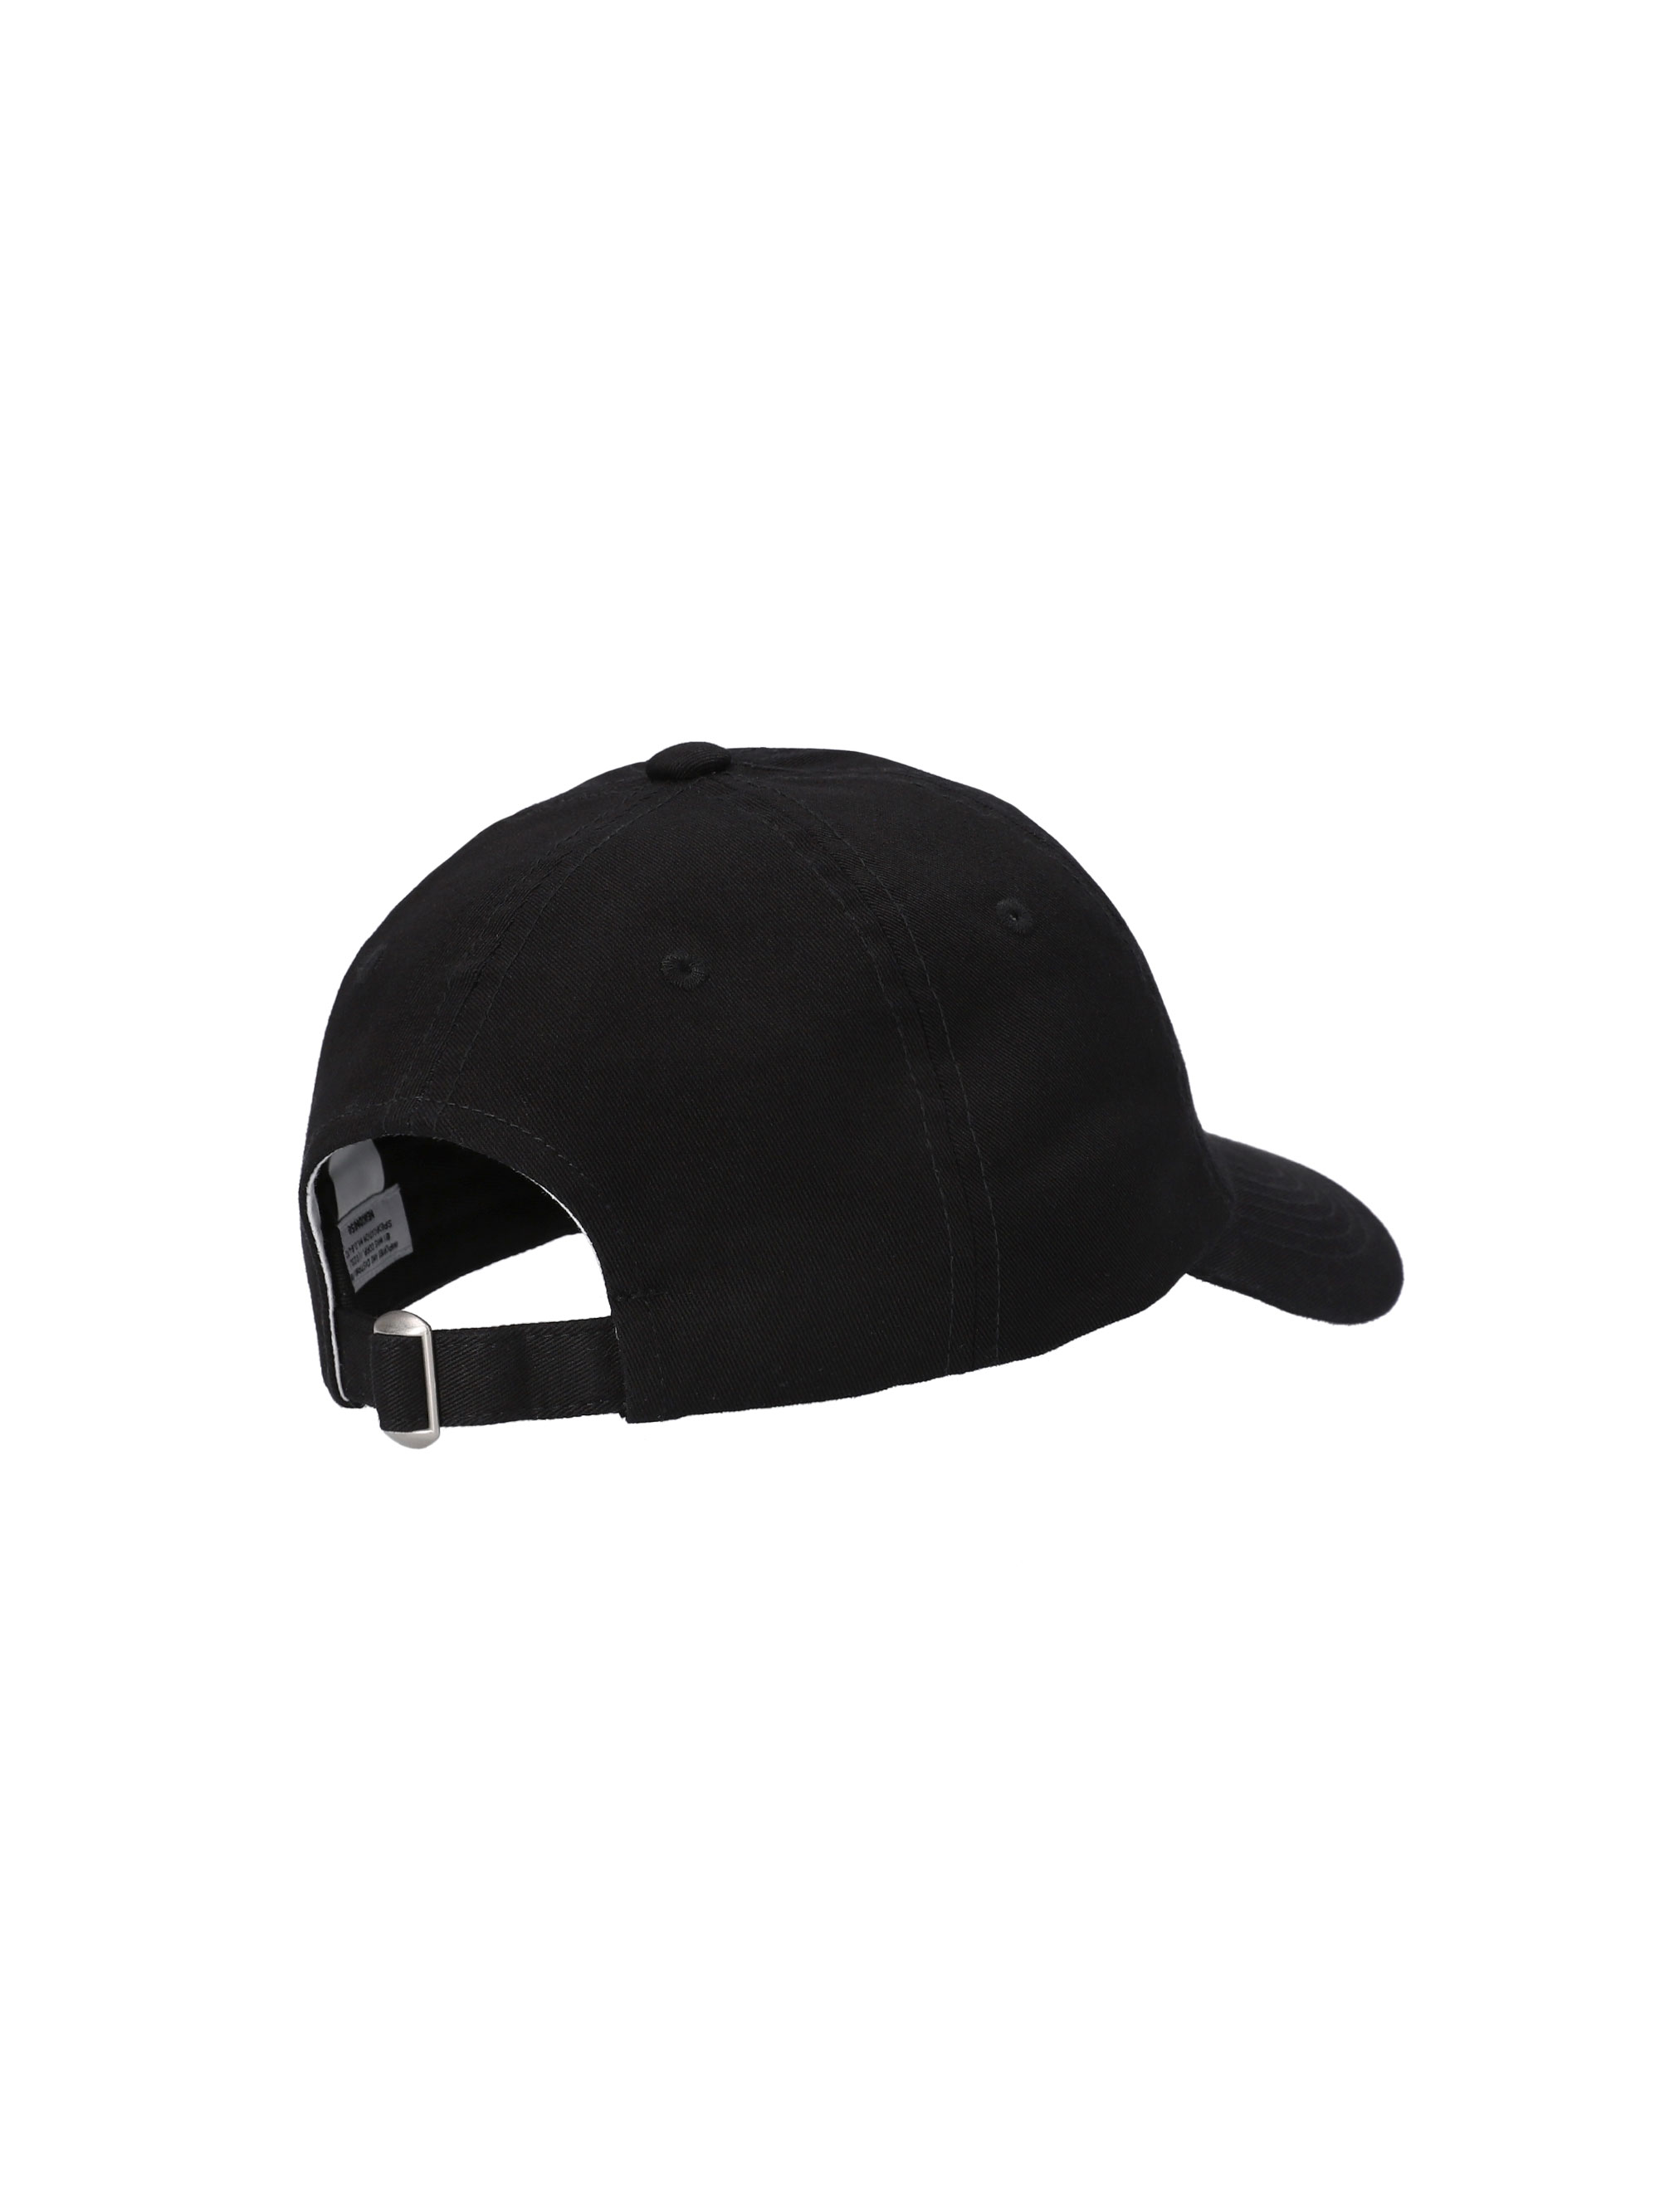 NEI LOGO BALL CAP / BLACK